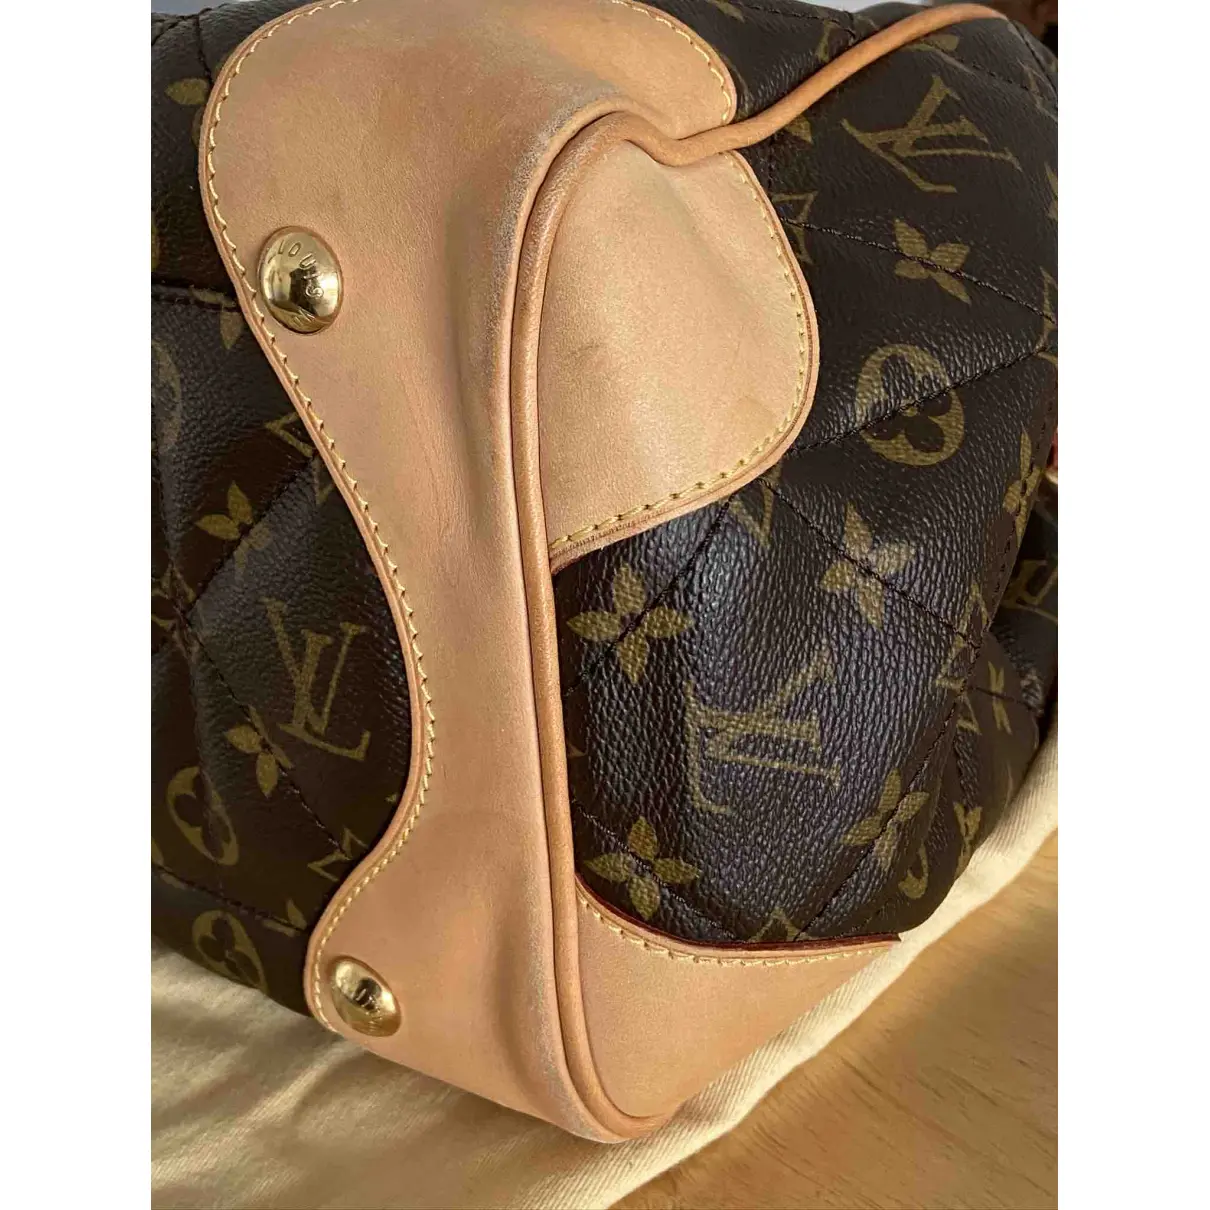 Etoile Shopper cloth handbag Louis Vuitton